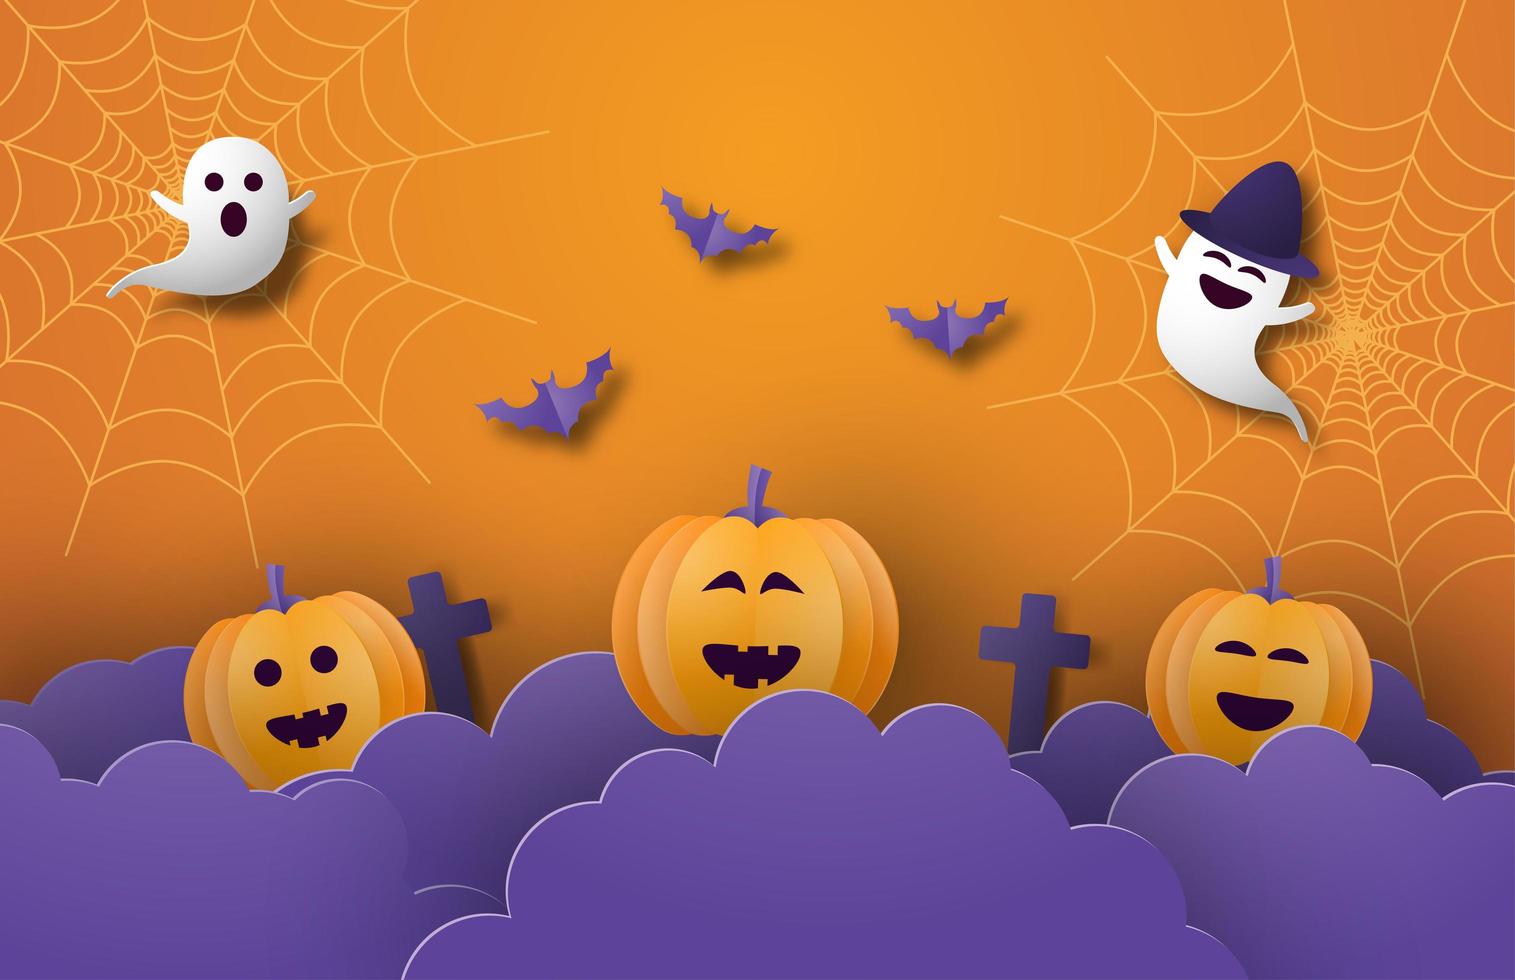 Paper art Halloween banner with pumpkins, ghosts and webs vector